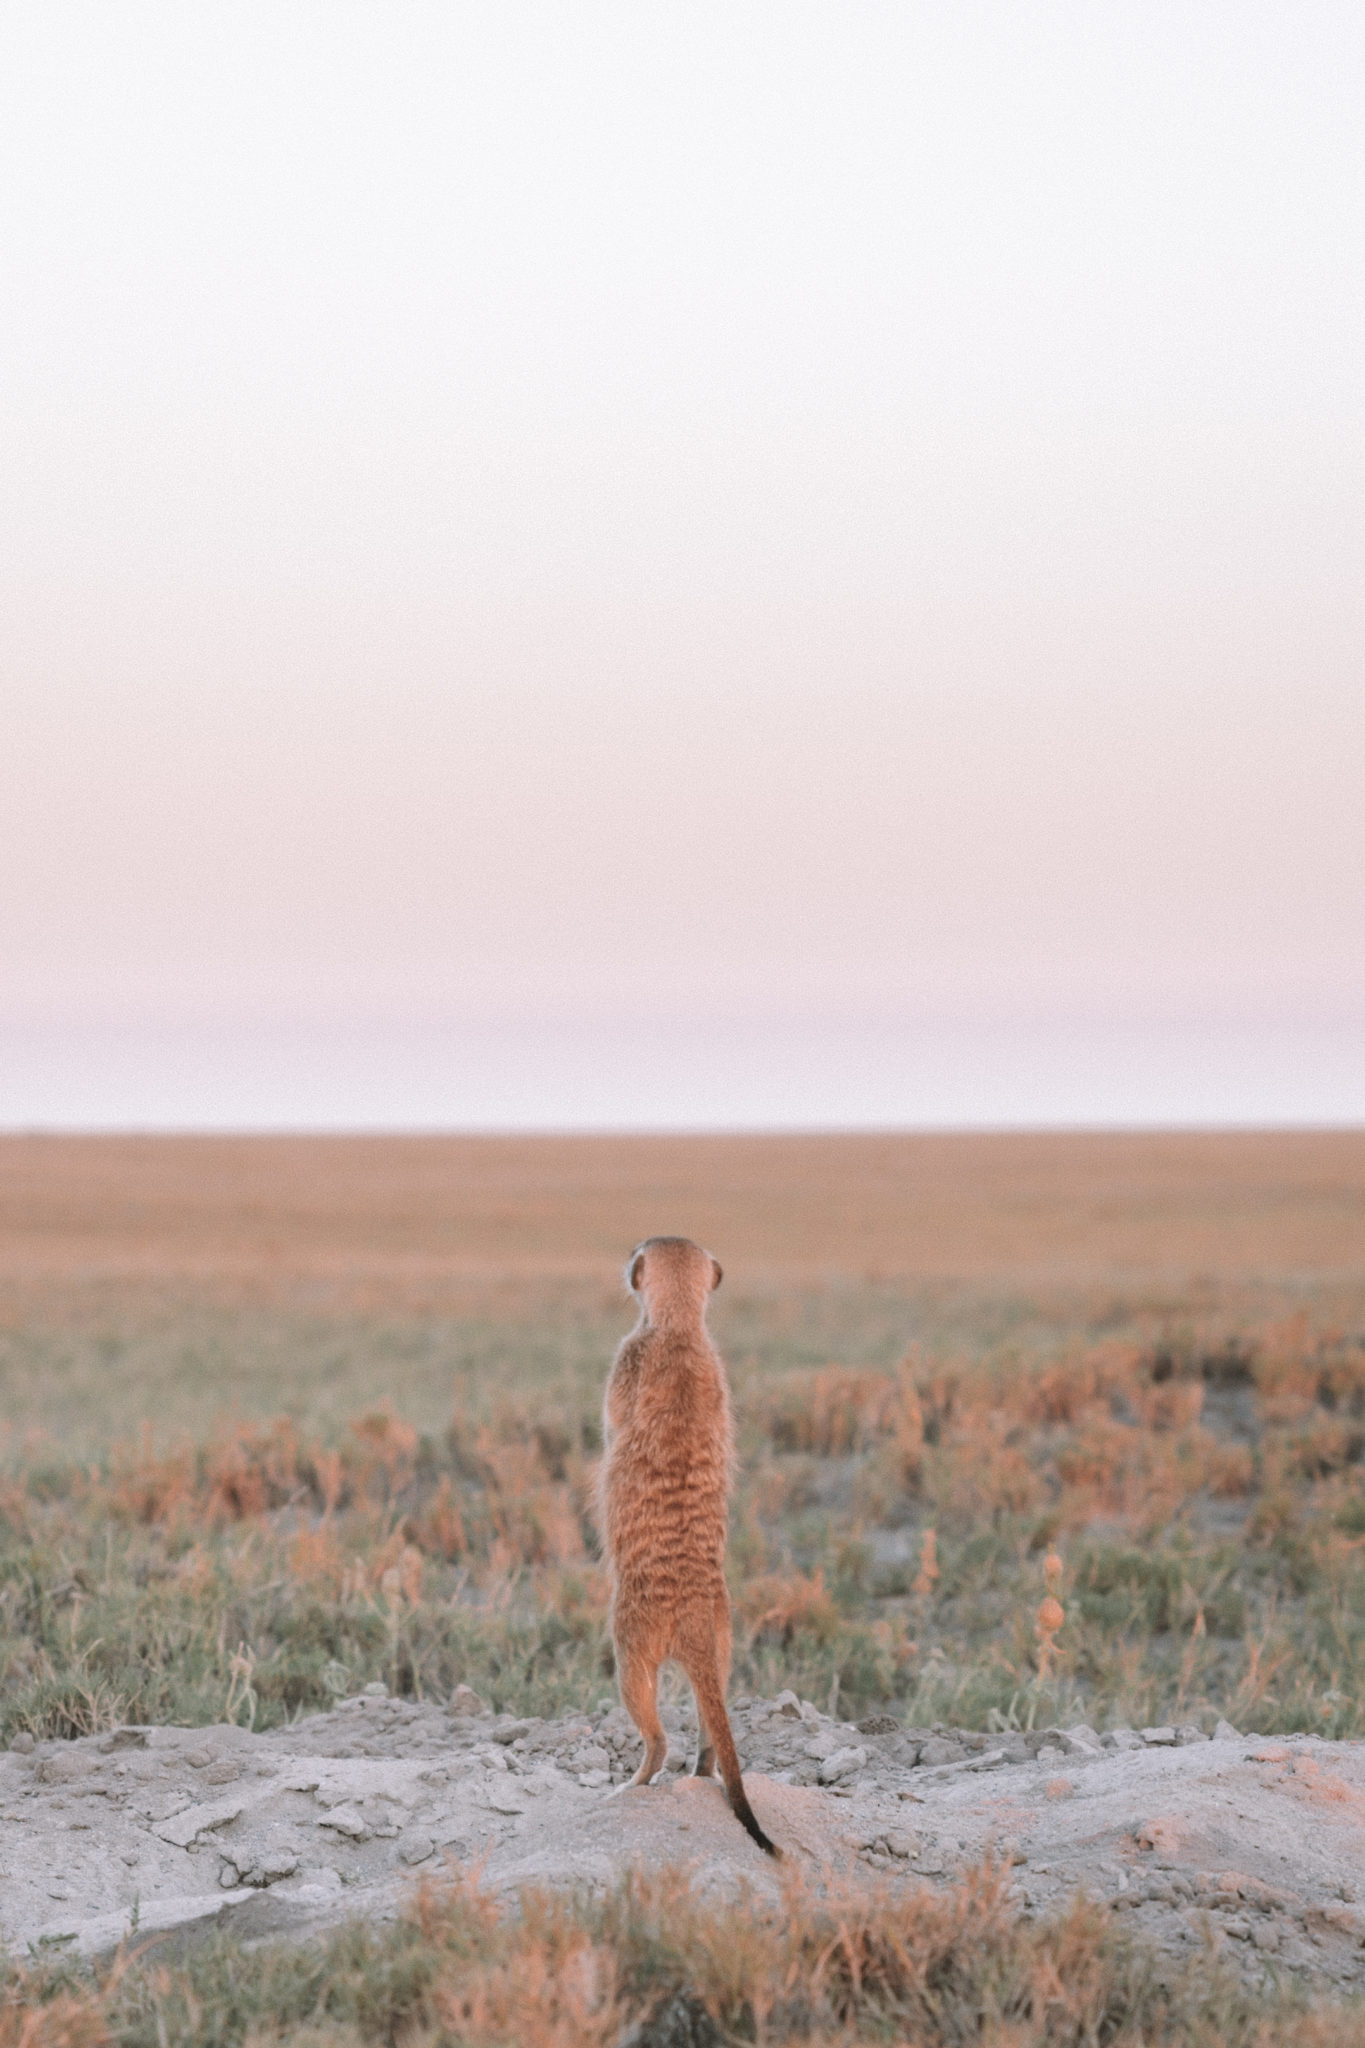 How to see the Meerkats in Botswana